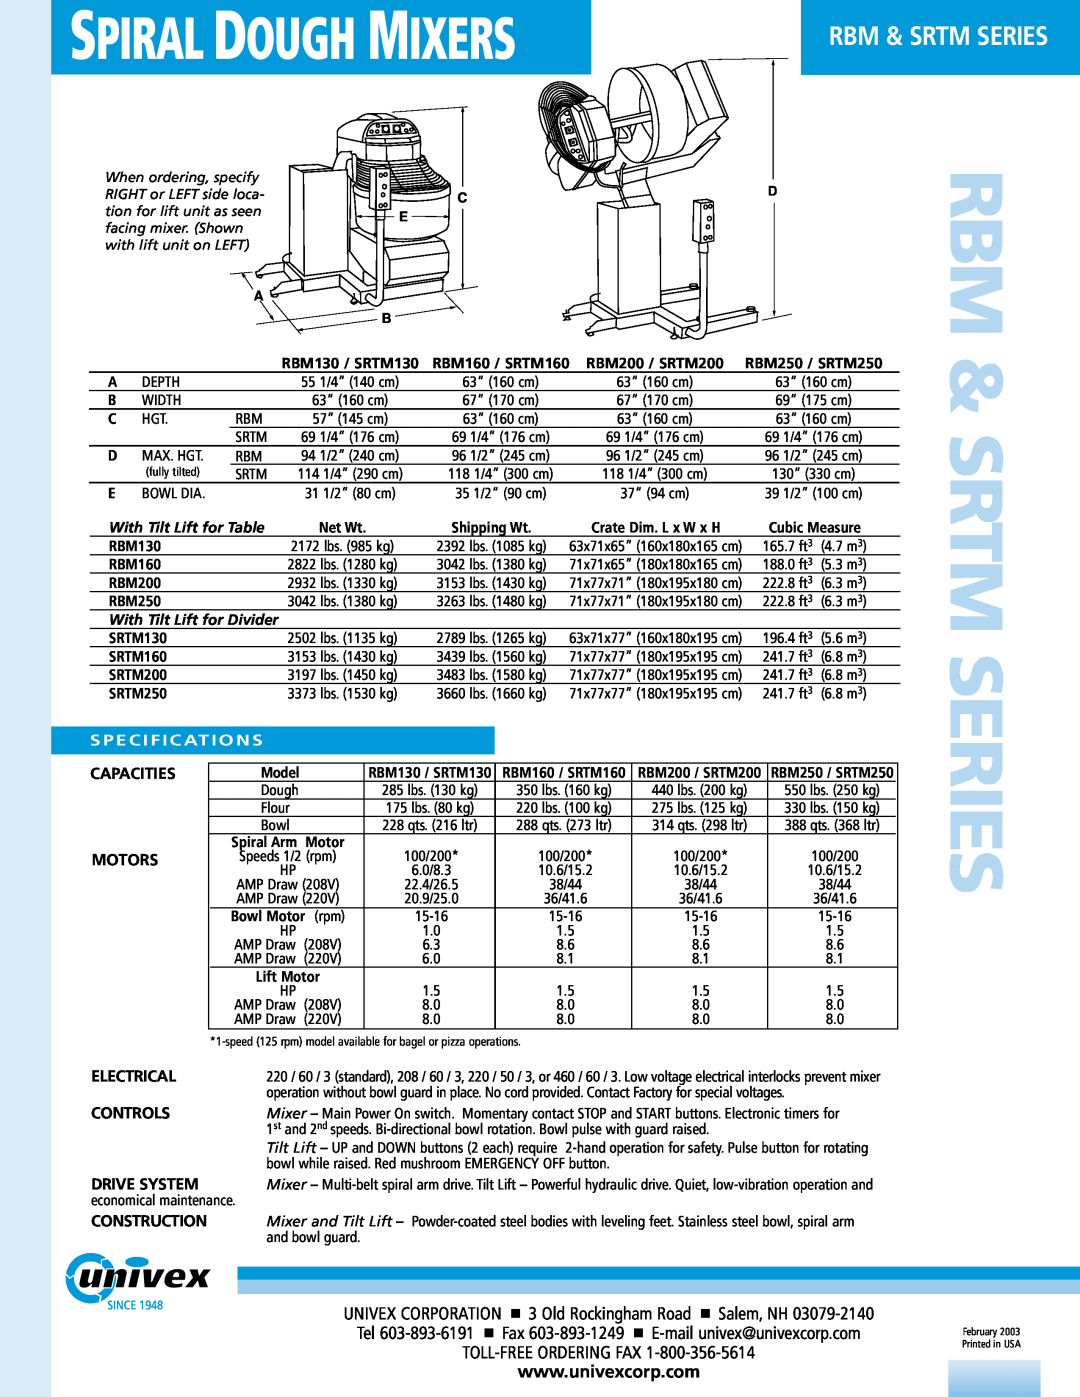 Univex SRTM, RBM Spiral Dough Mixers, Rbm & Srtm Series, S P E C I F I C At I O N S, Capacities Motors, Electrical 